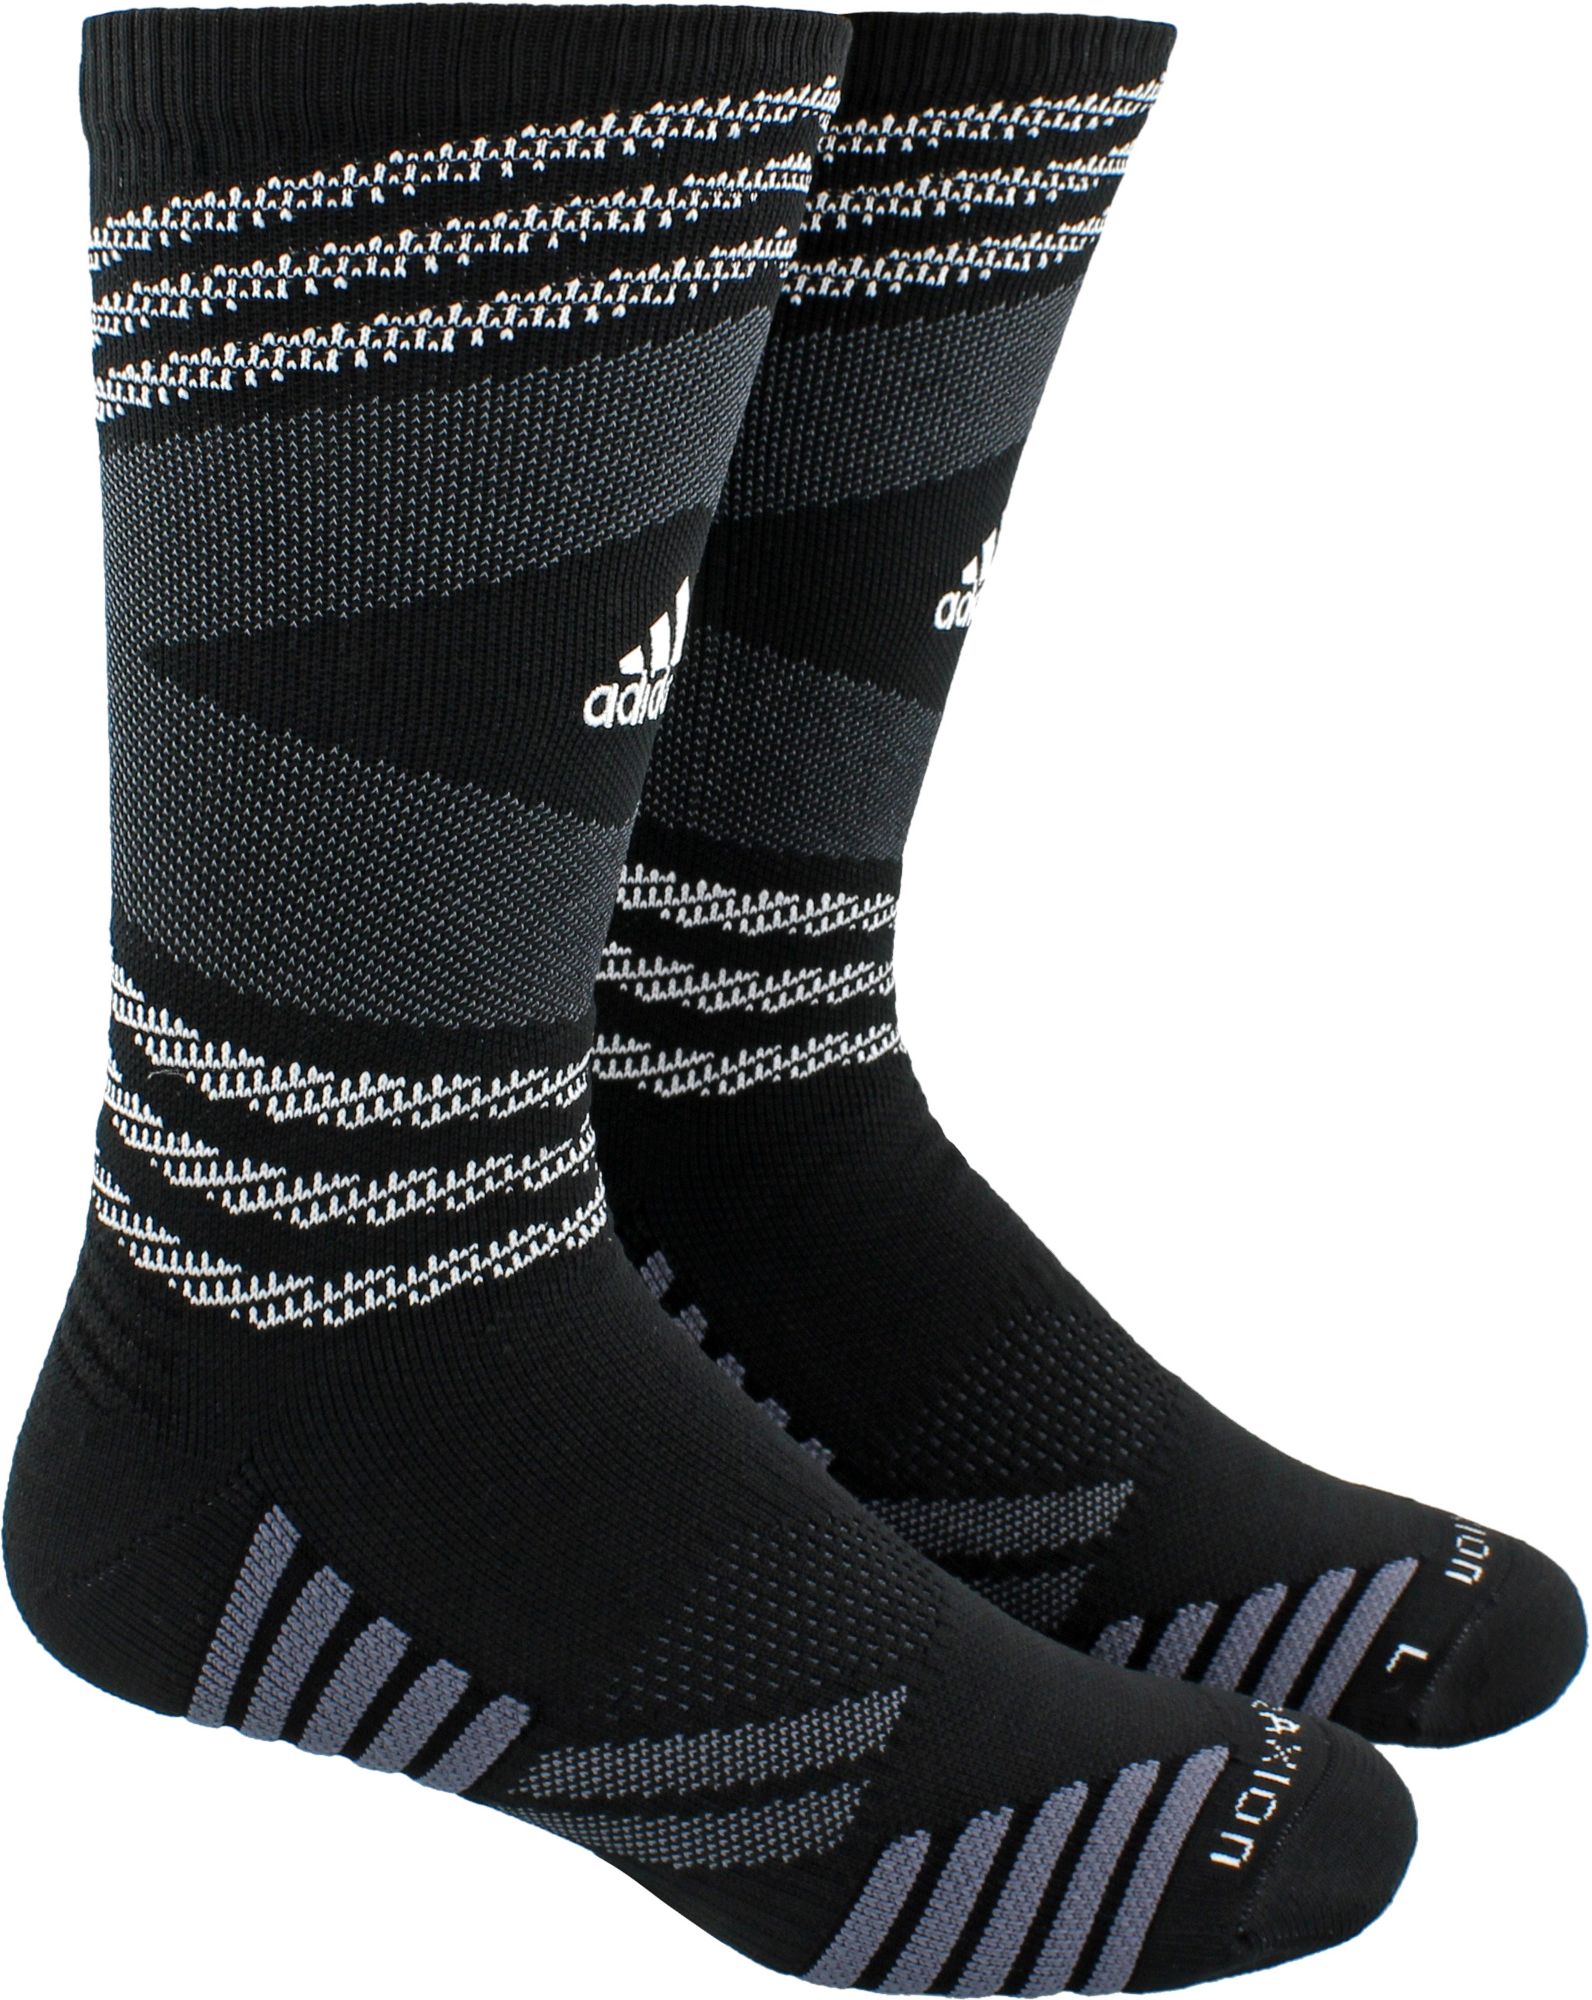 adidas traxion soccer socks